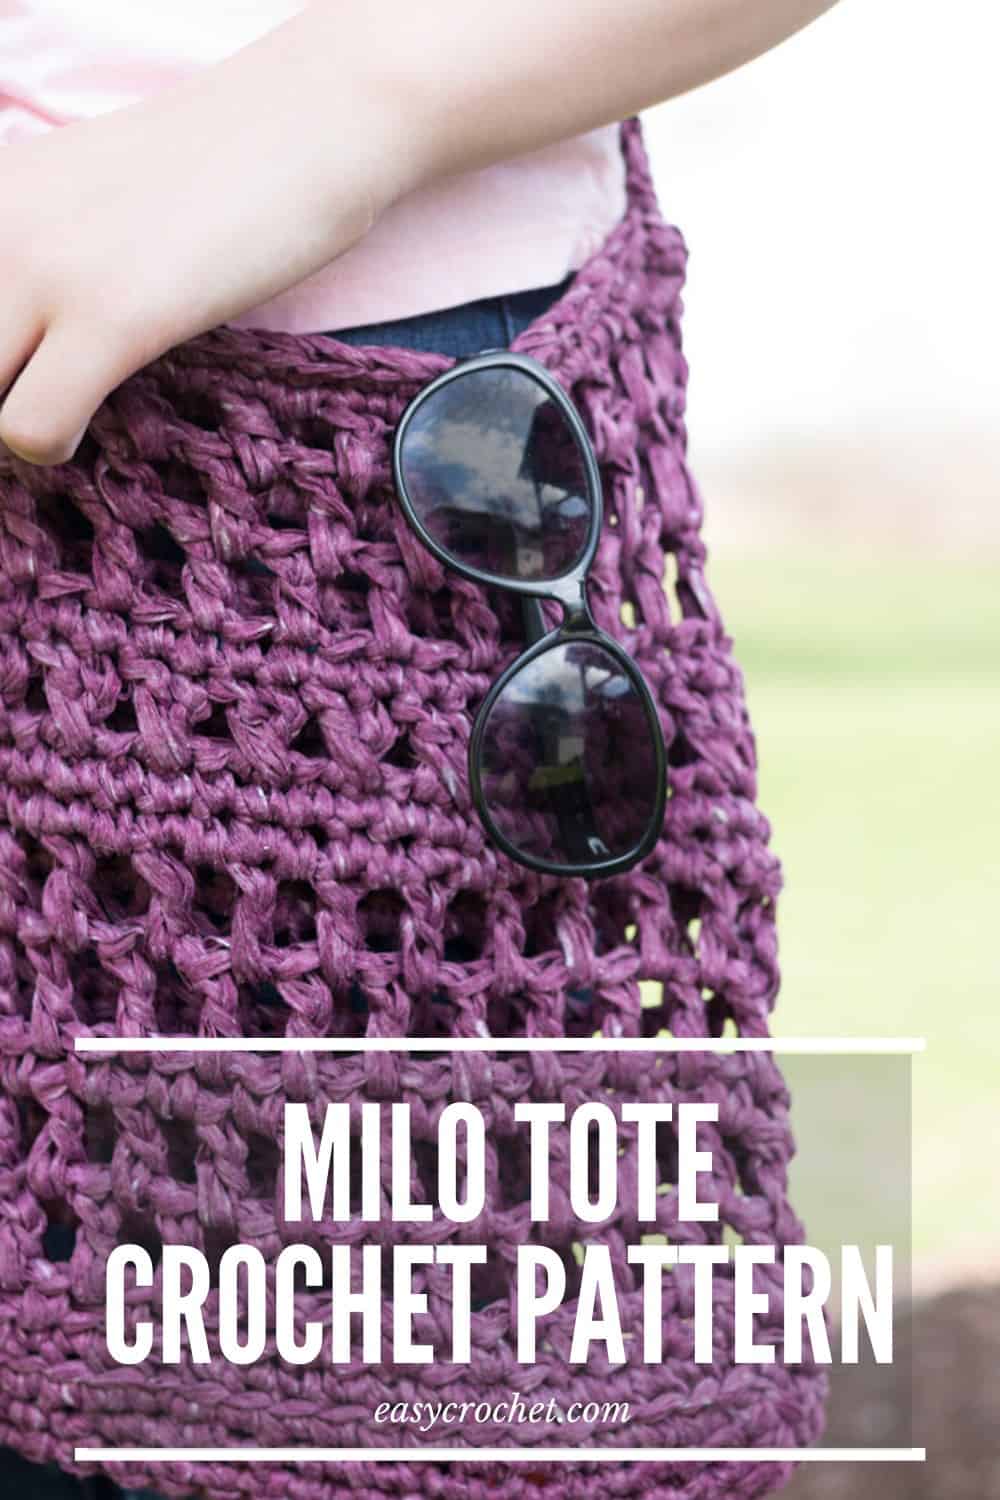 Milo Crochet Market Tote Bag Free Pattern via @easycrochetcom